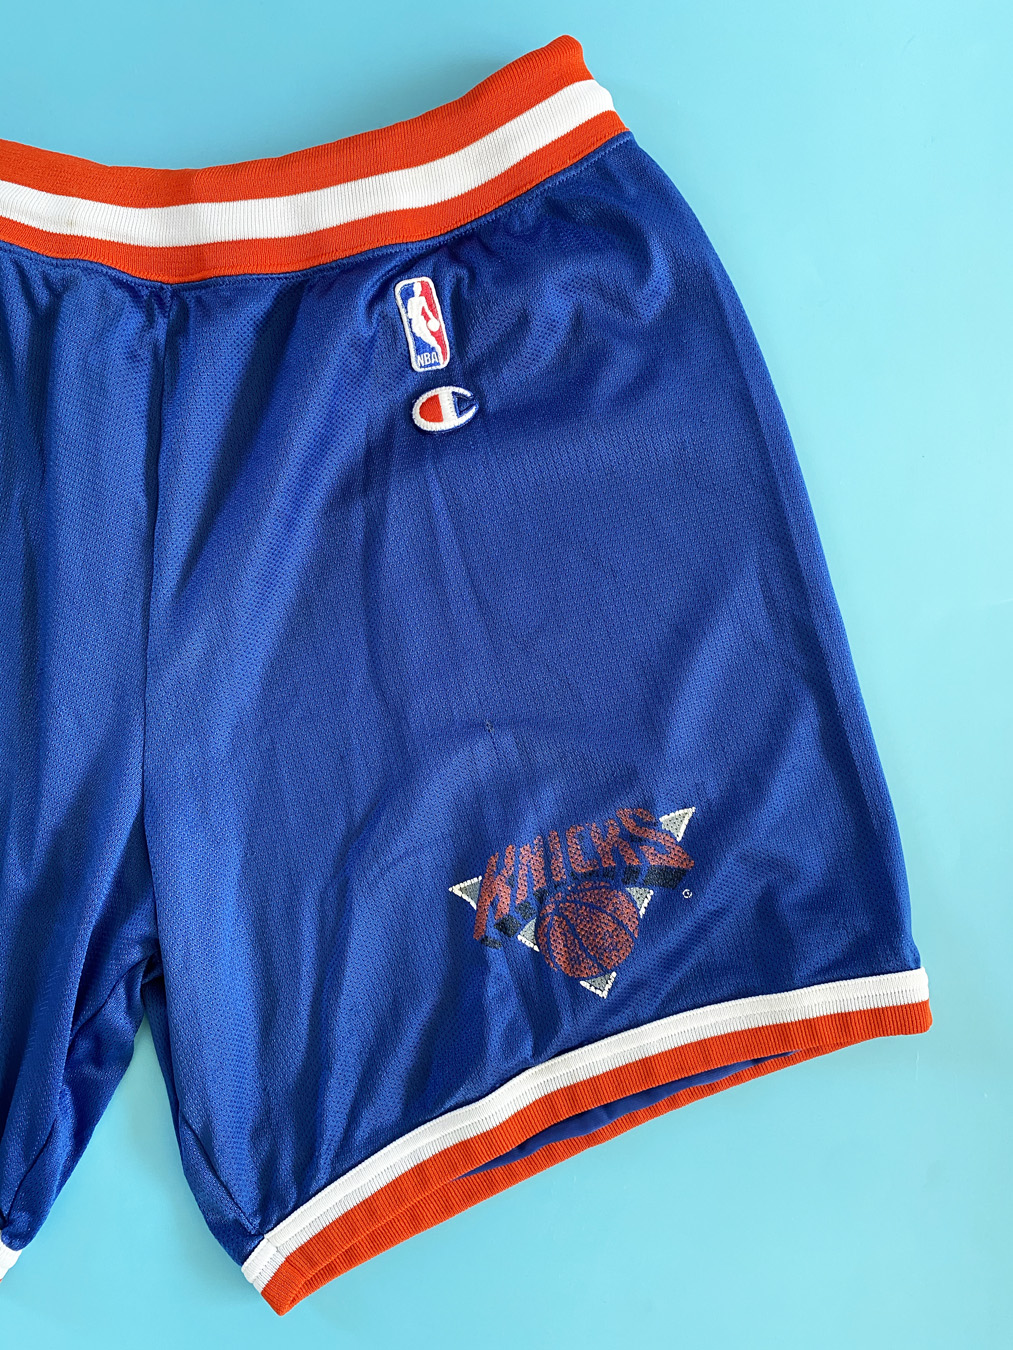 Vintage 90s New York Knicks Champion Shorts Mens Size Large 